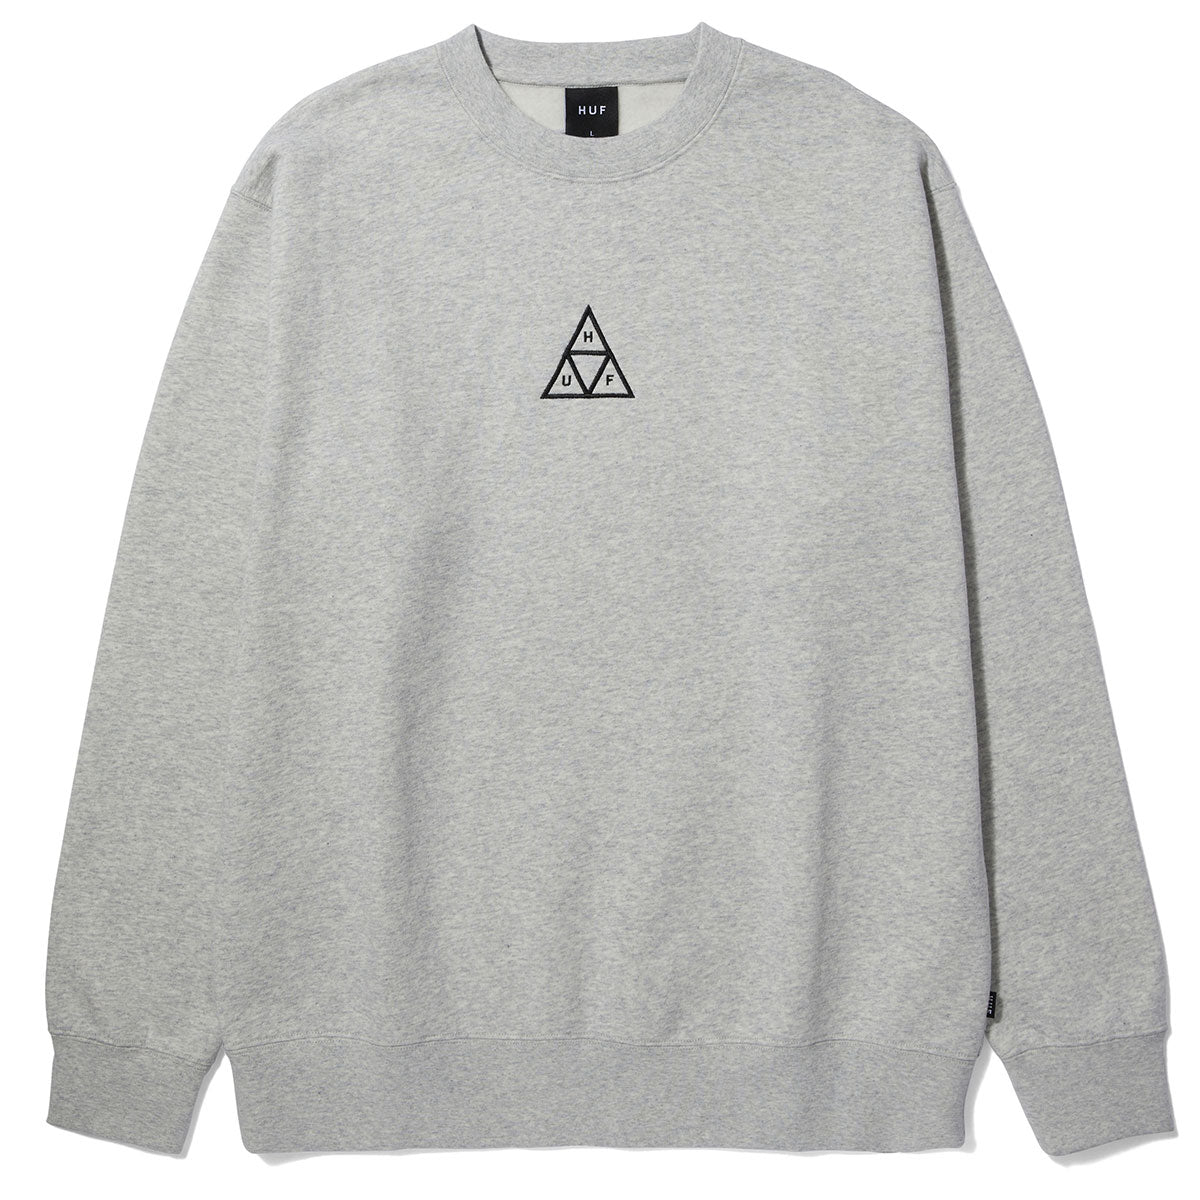 HUF Set Triple Triangle Crewneck Sweatshirt - Heather Grey image 1